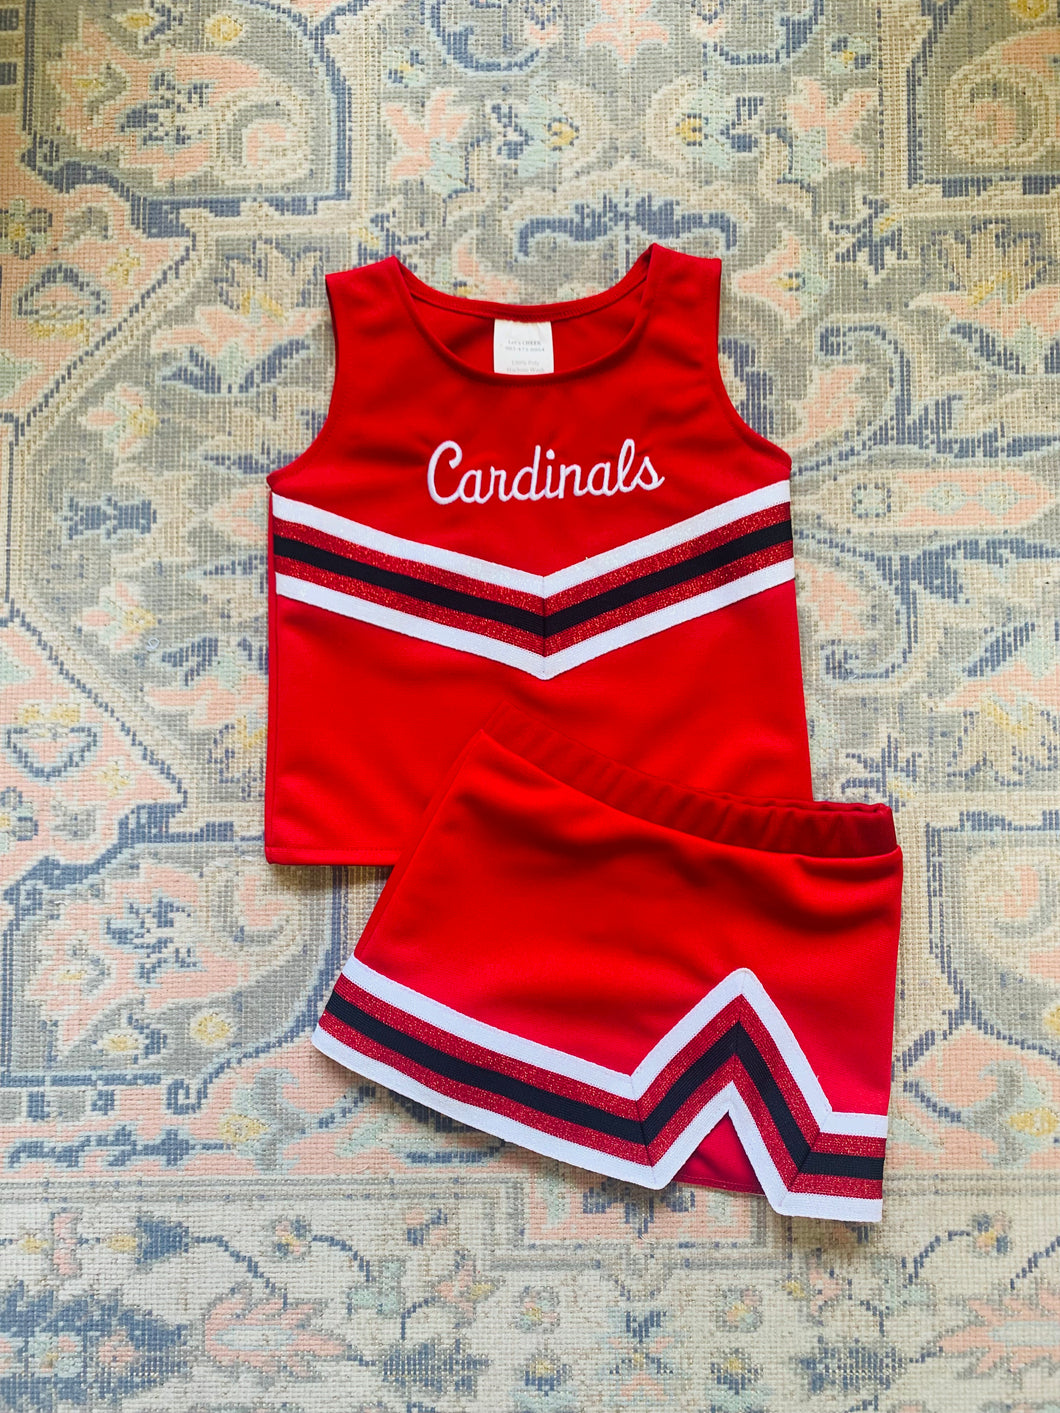 Cardinals Cheer Uniform